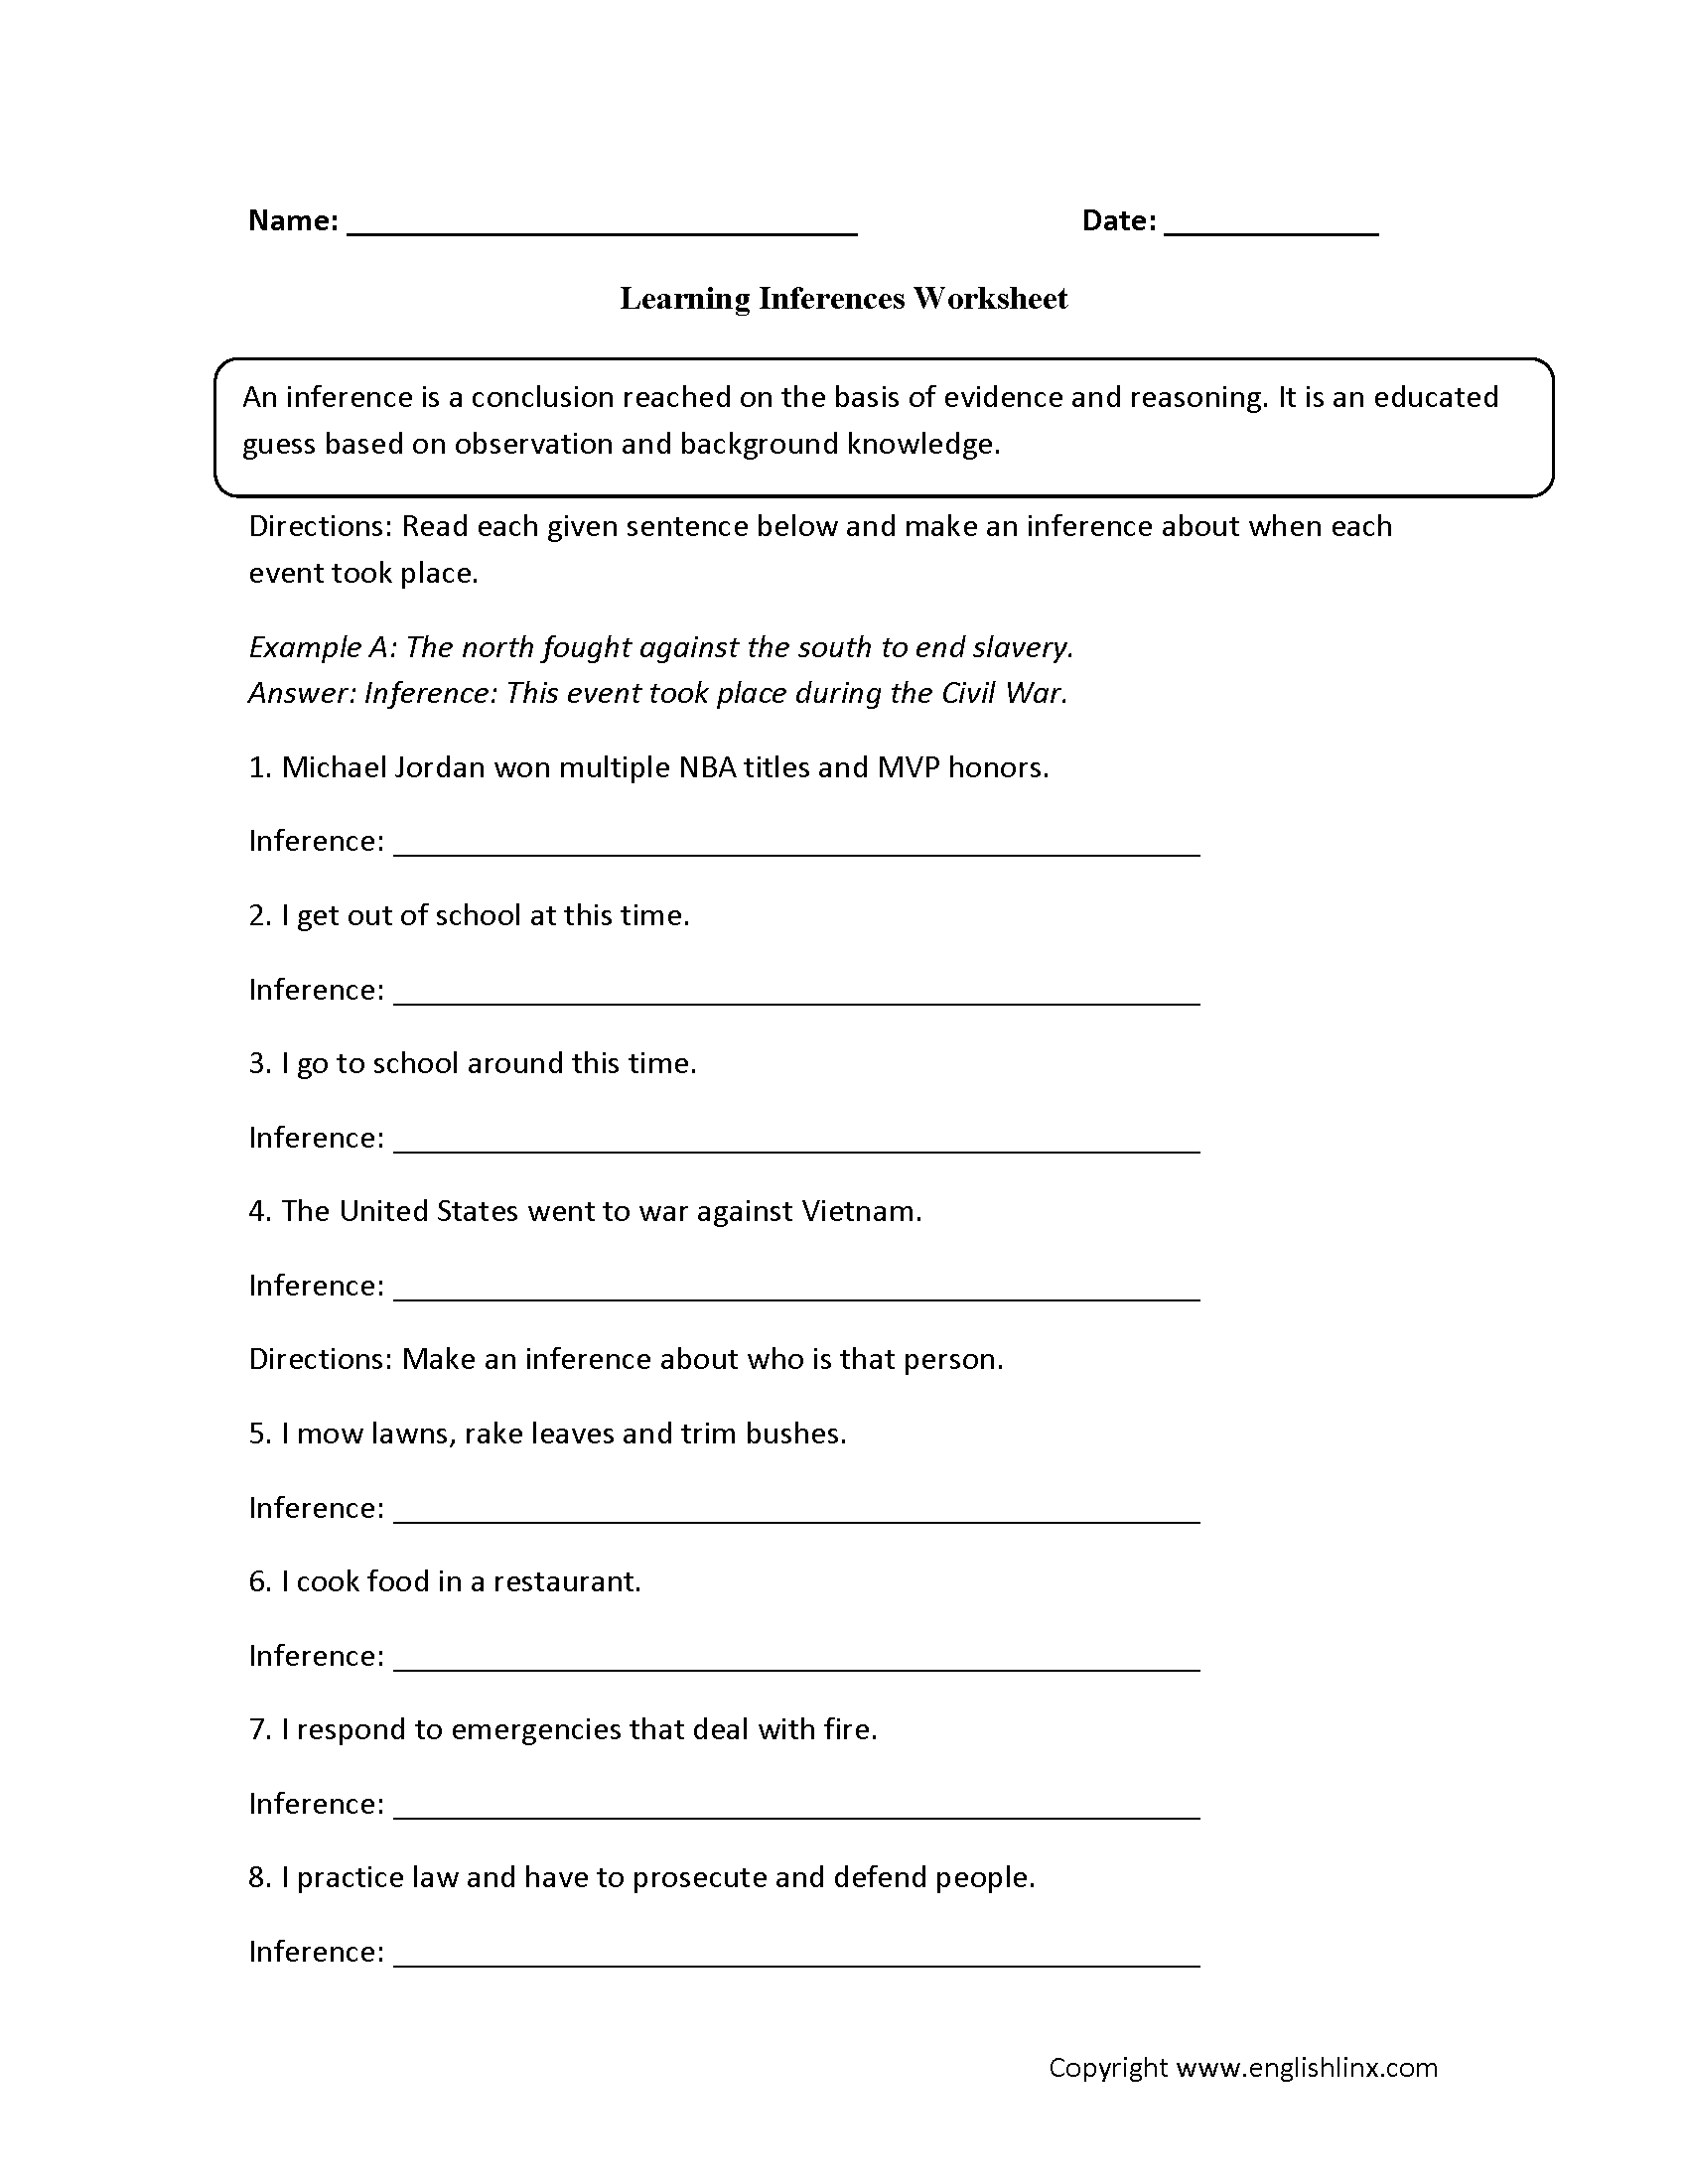 11 Best Images of Making Inferences Worksheets 11th Grade 11th Grade In Observation Vs Inference Worksheet